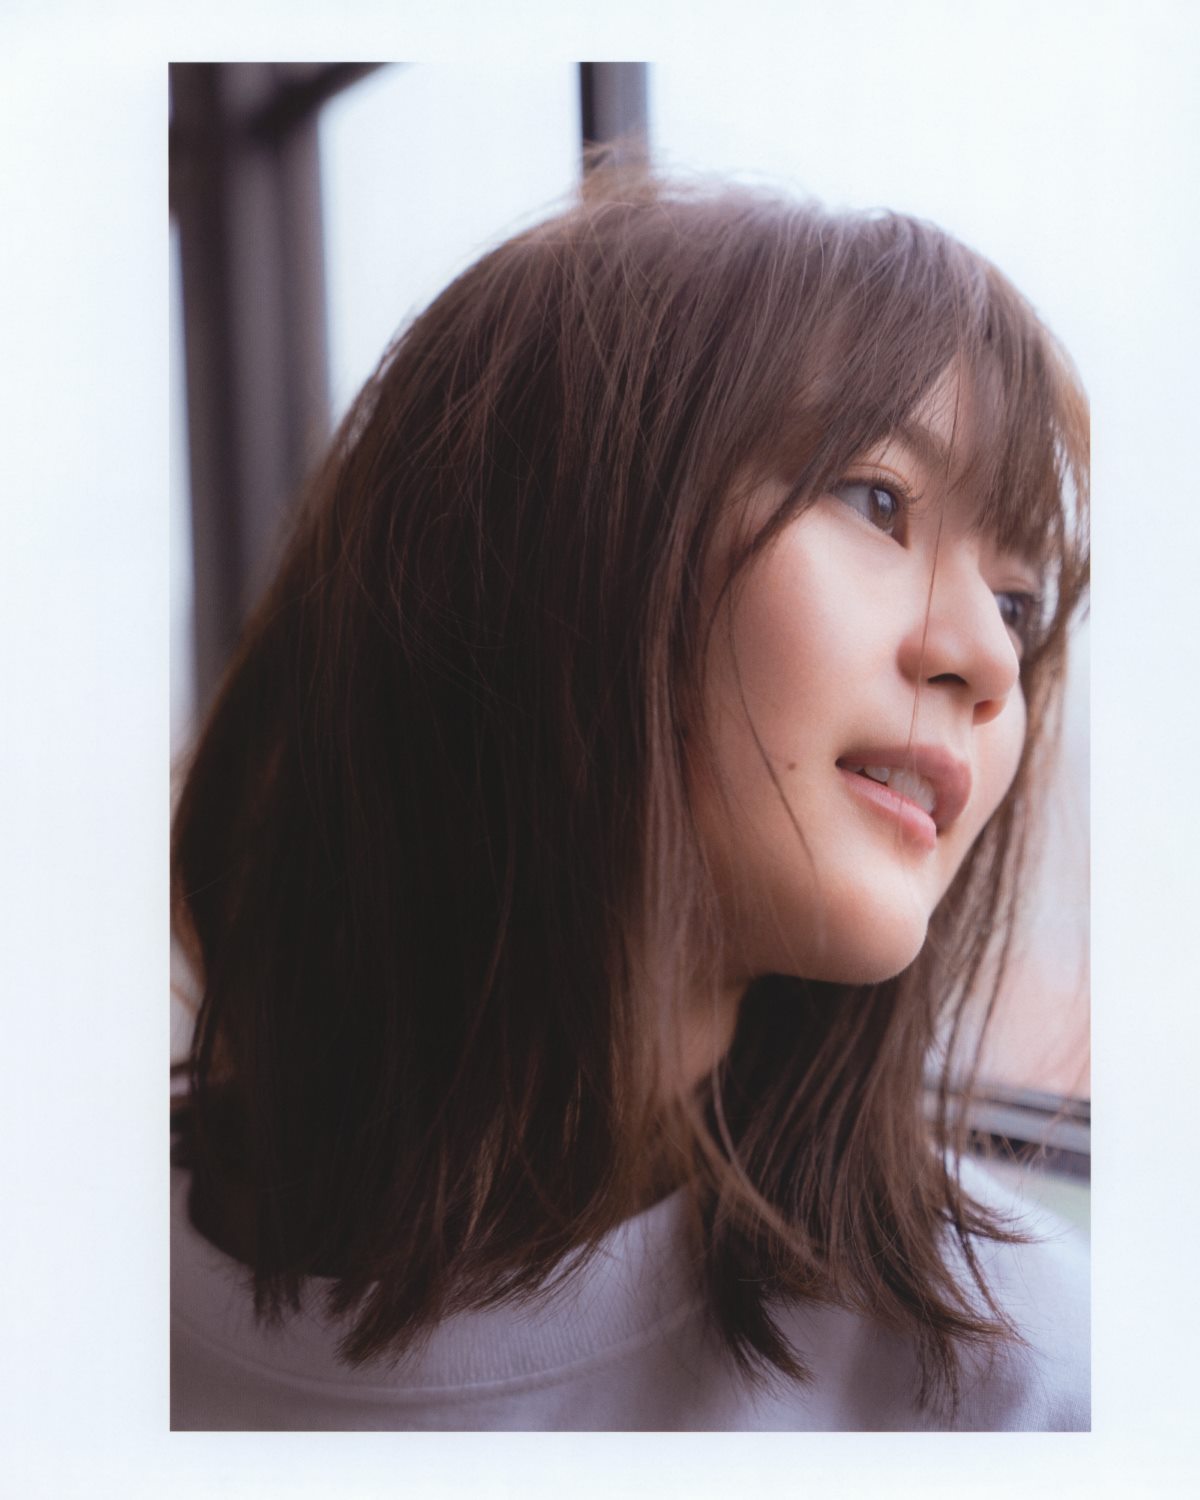 Photobook Ikuta Erika 2nd Photobook Intermission Nogizaka46 Bonus Postcard 生田絵梨花写真集 インターミッション 0072 4268780424.jpg